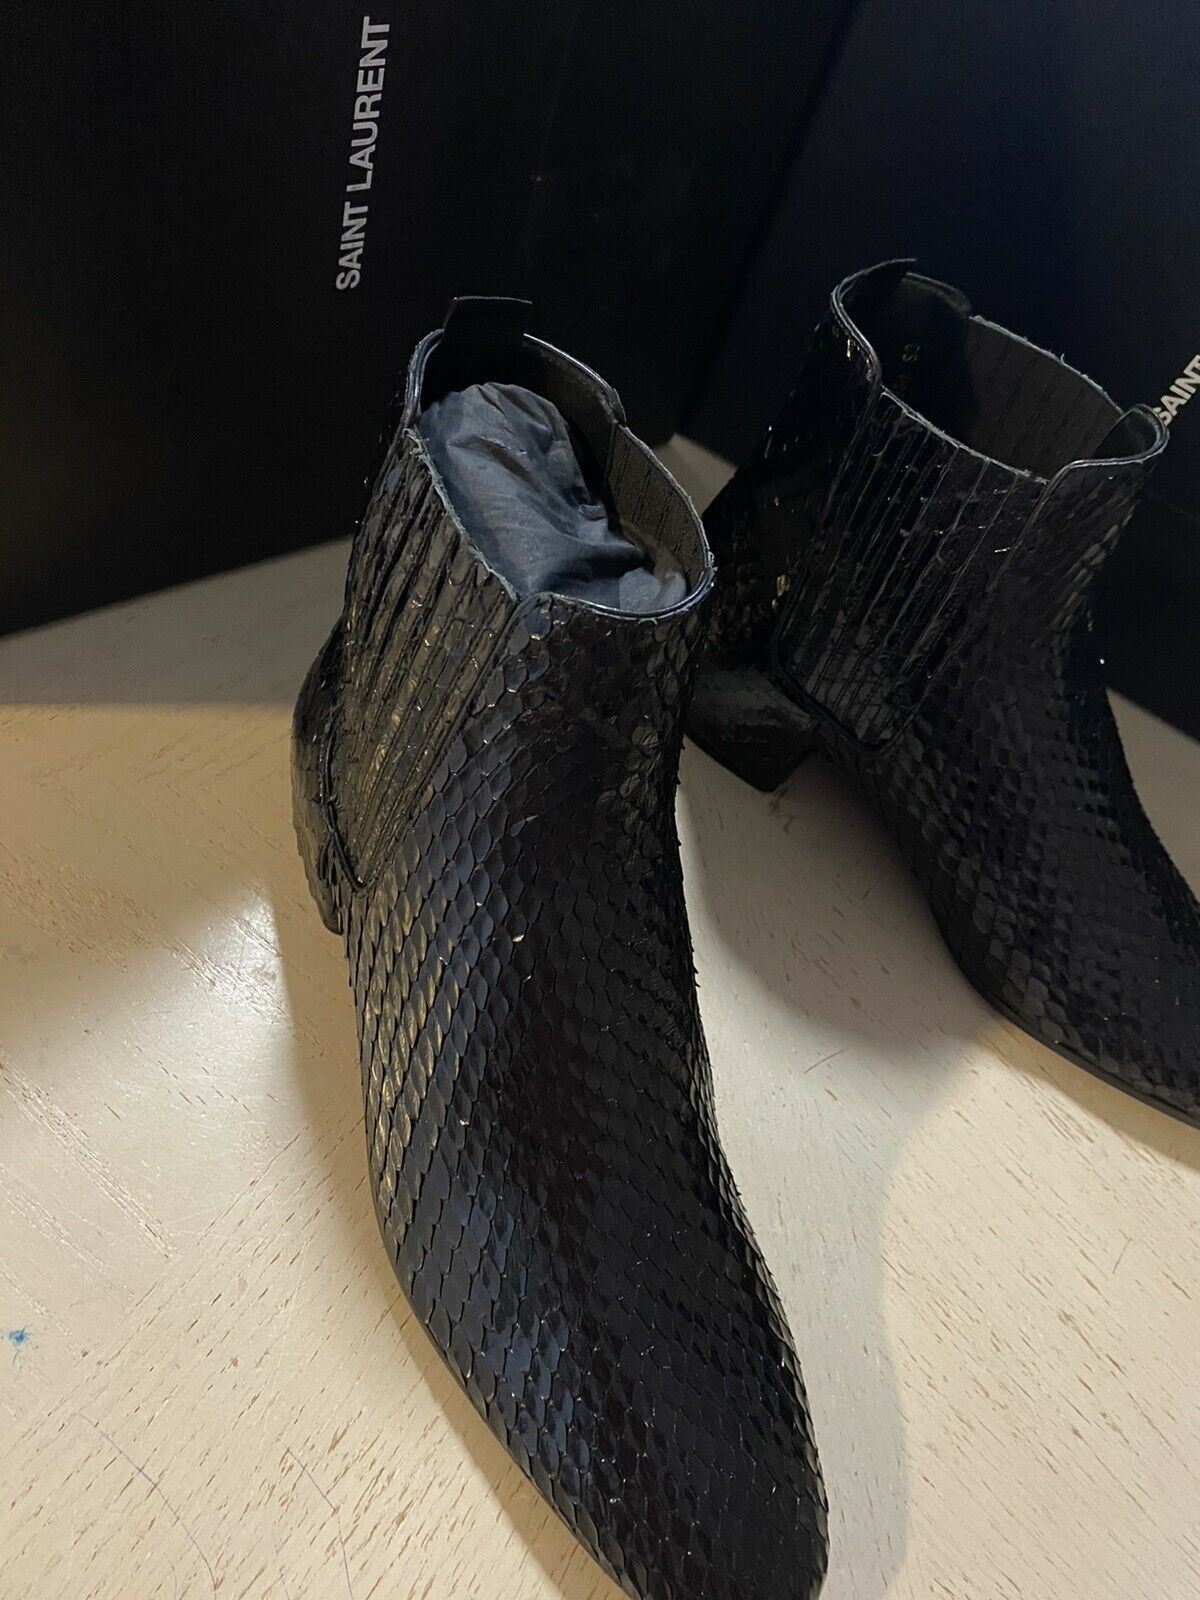 NIB $1995 Saint Lauren Men Snake Leather Boots Shoes Black 10 US / 43 Eu Italy